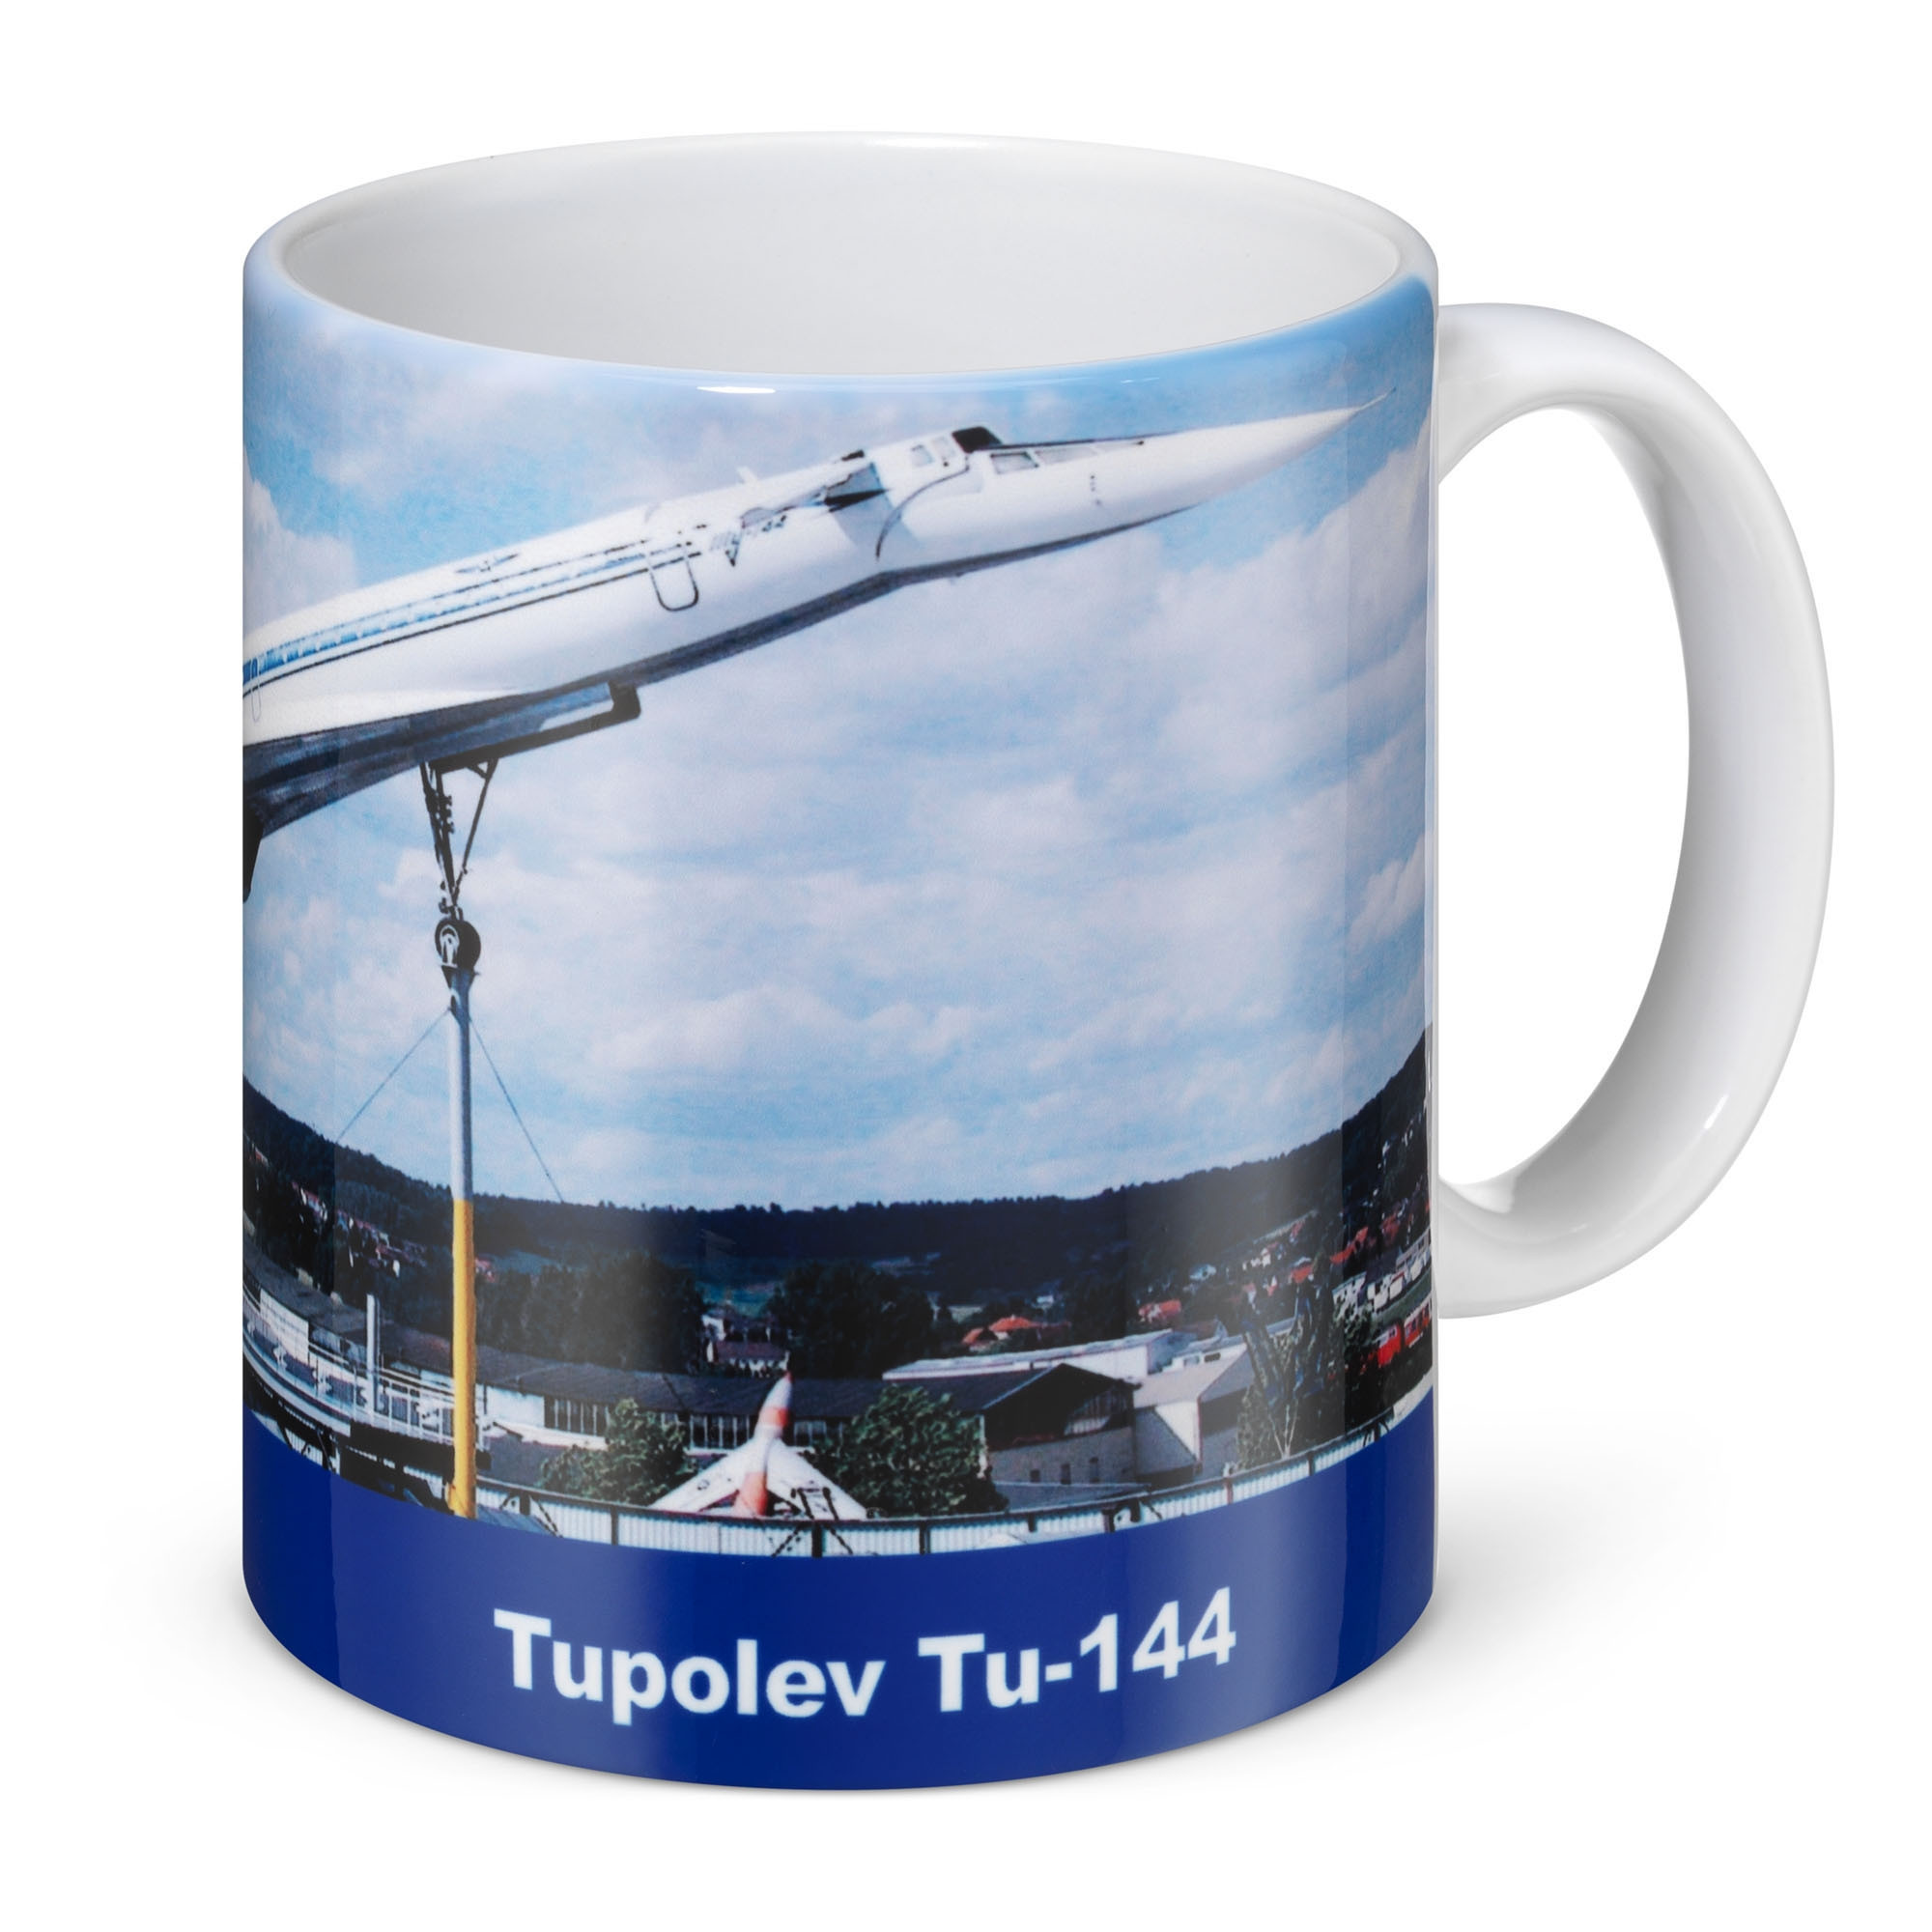 Fototasse Concorde / Tupolev